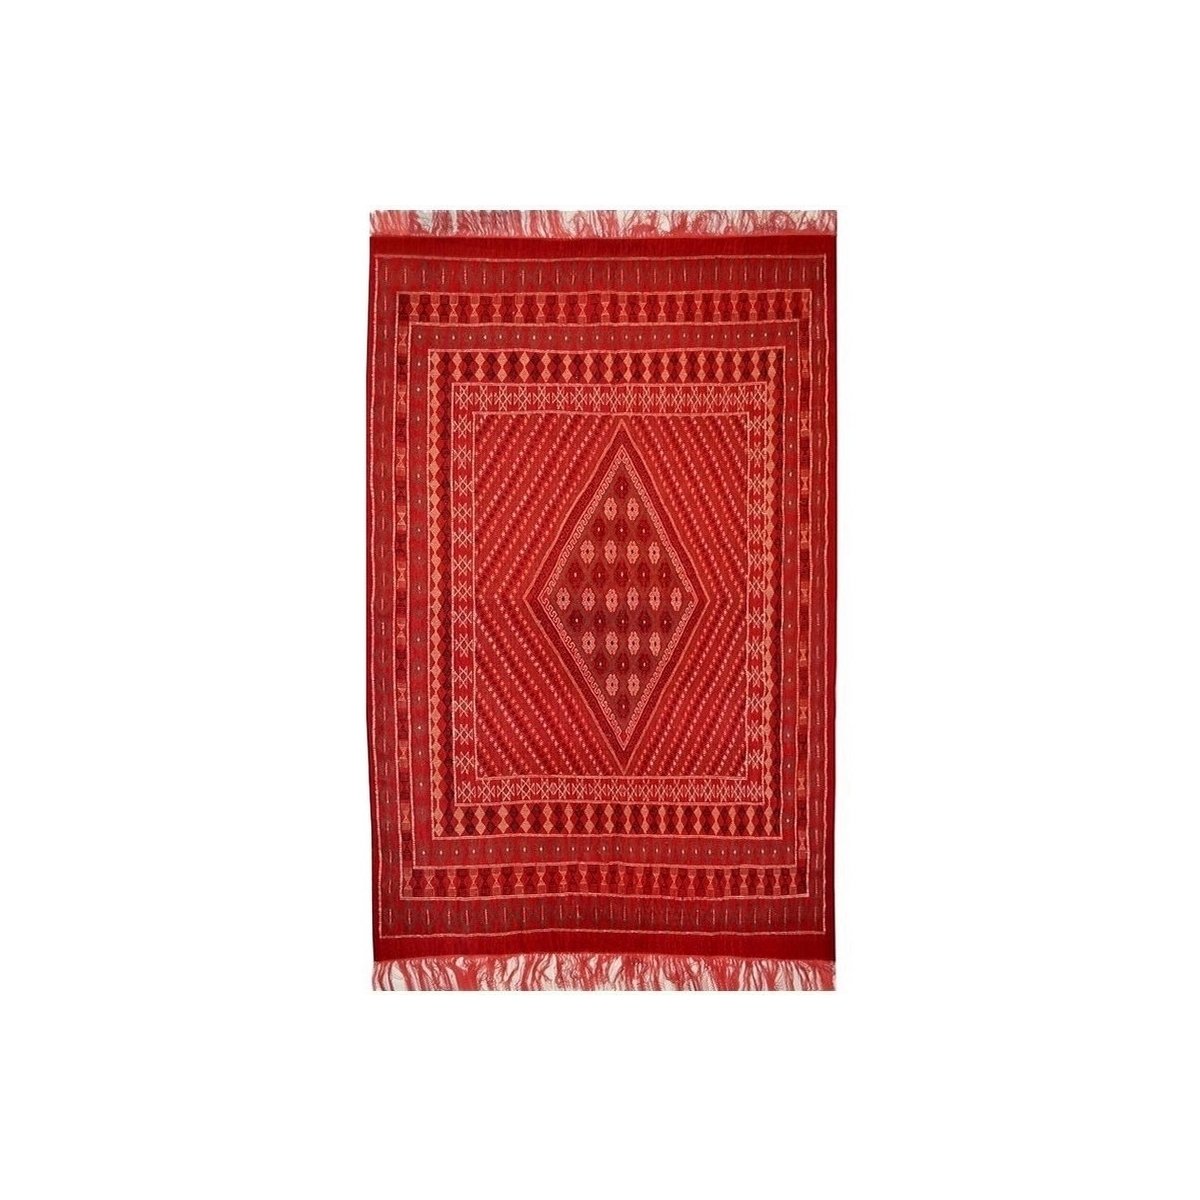 Berber carpet Large Rug Margoum Haouaria 205x290 Red (Handmade, Wool, Tunisia) Tunisian margoum rug from the city of Kairouan. R